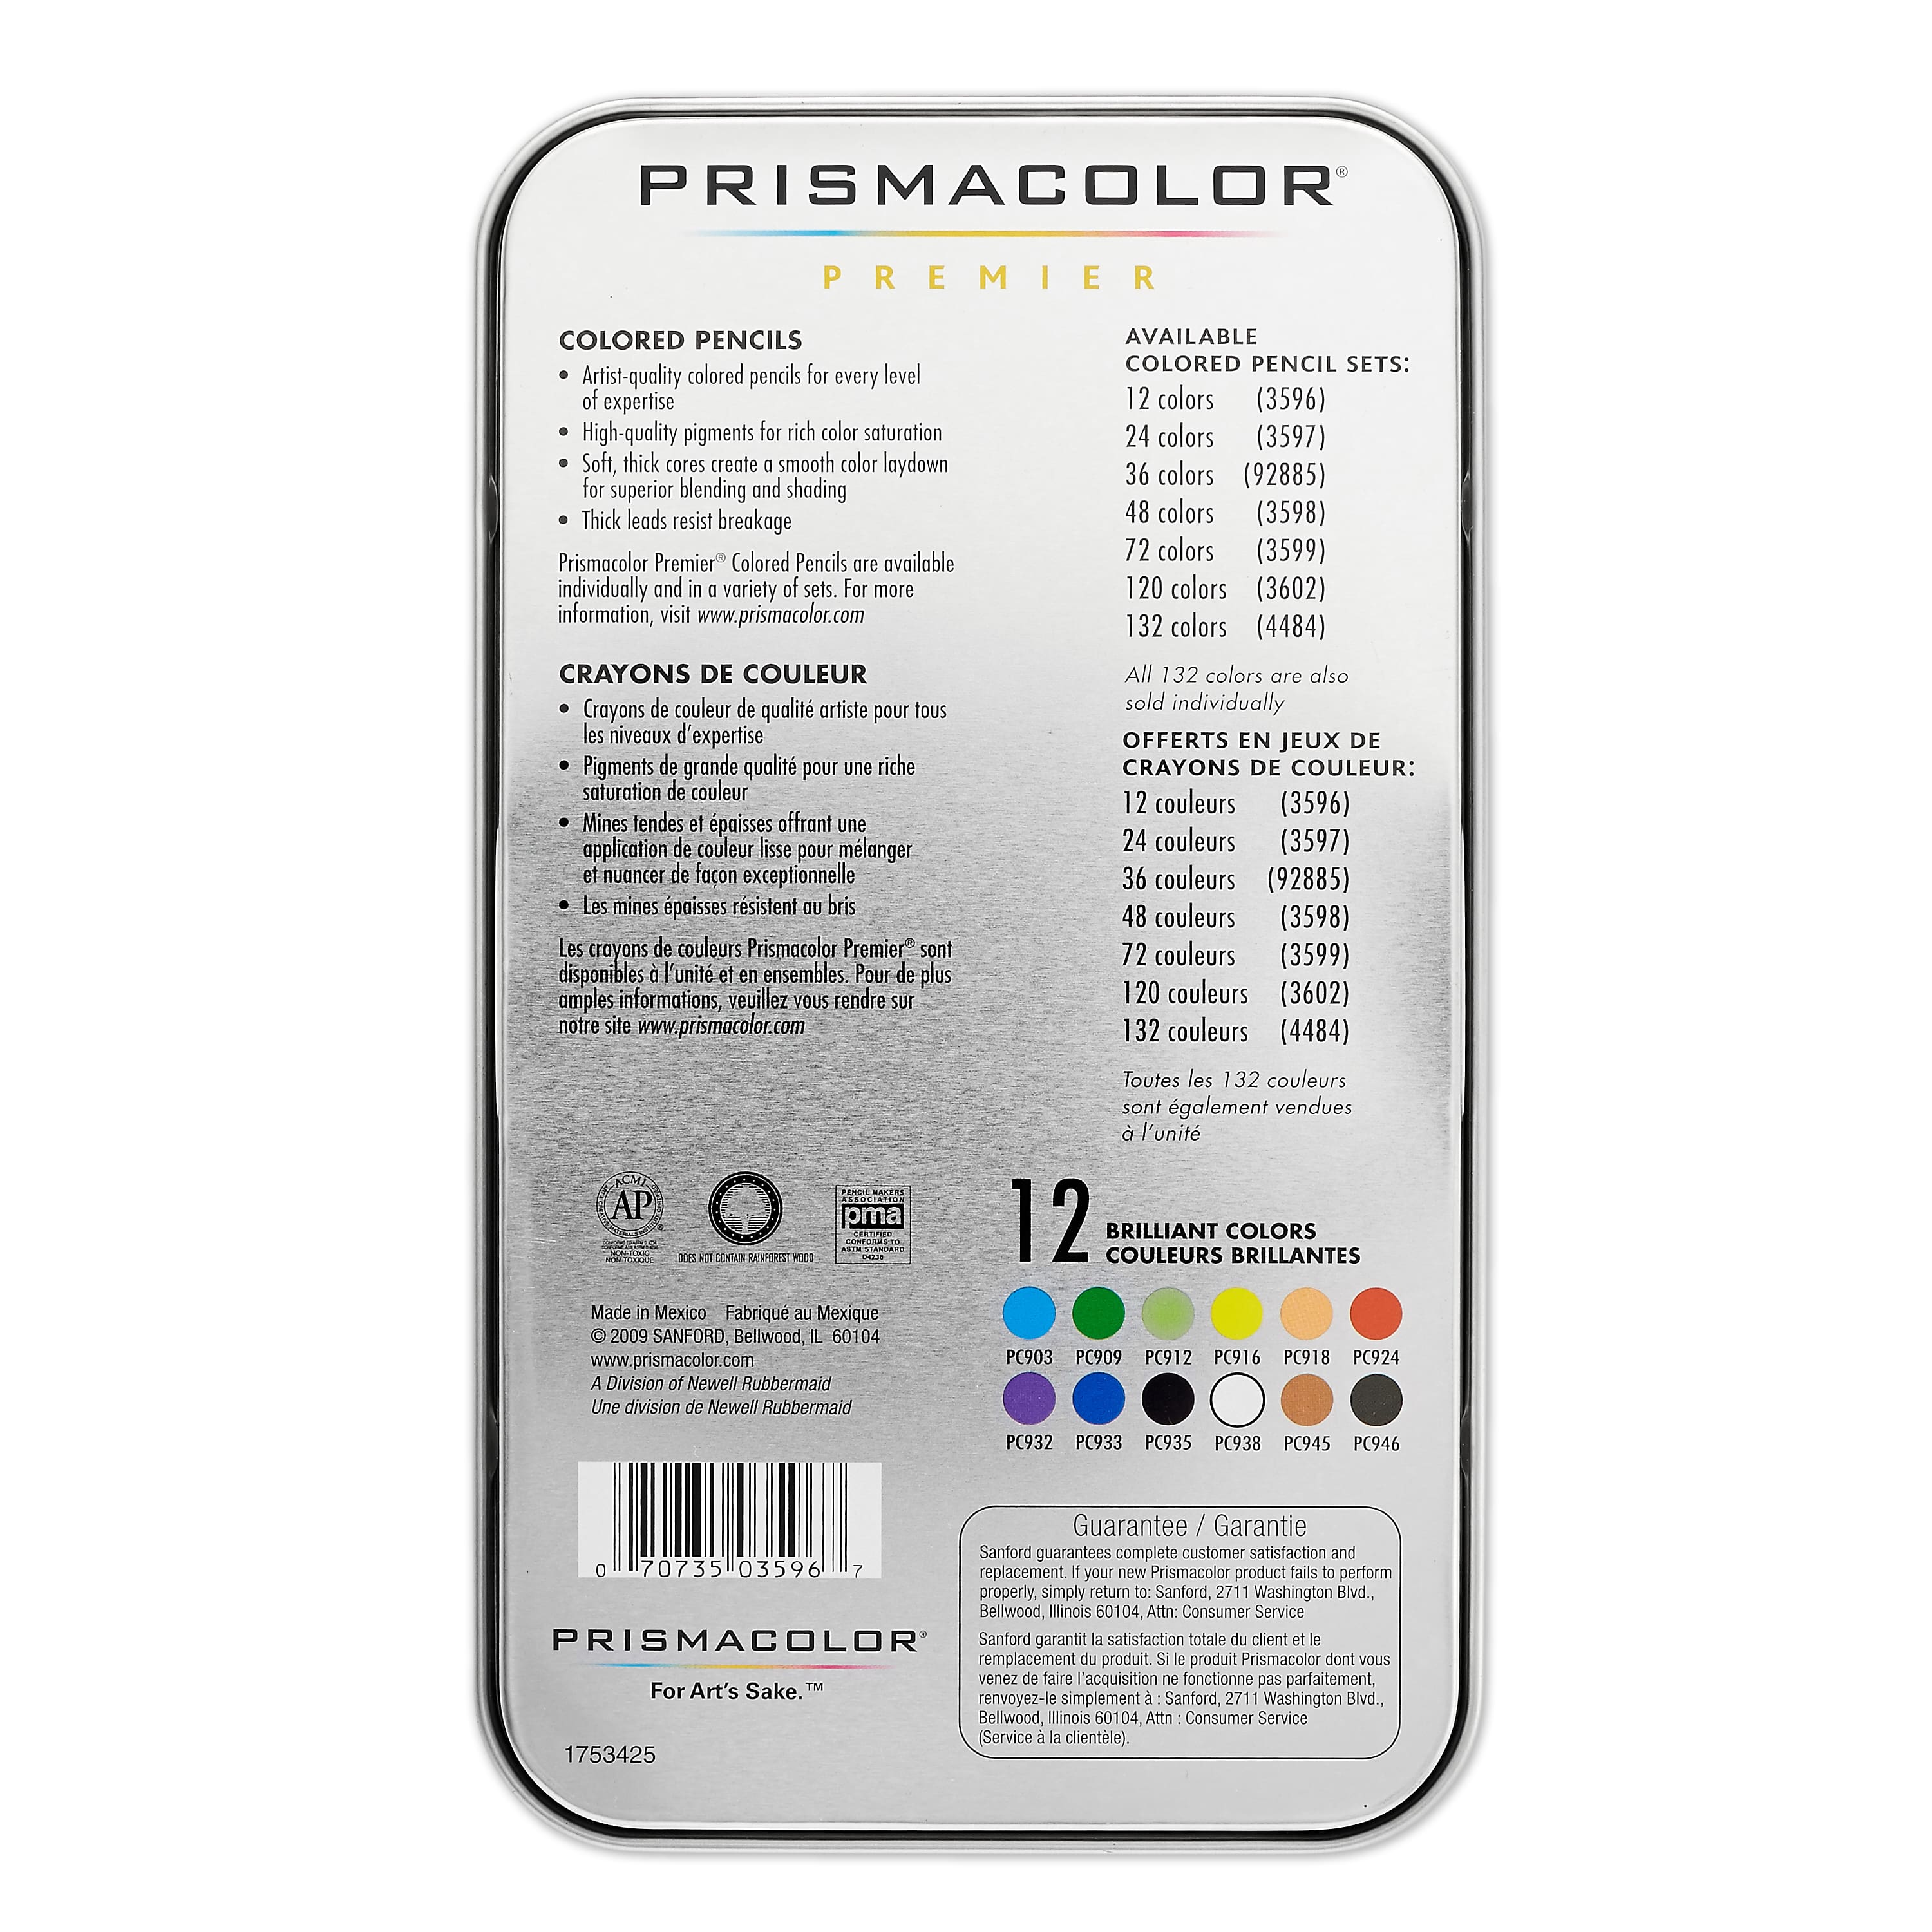 Prismacolor Colored Pencil - 12 pack